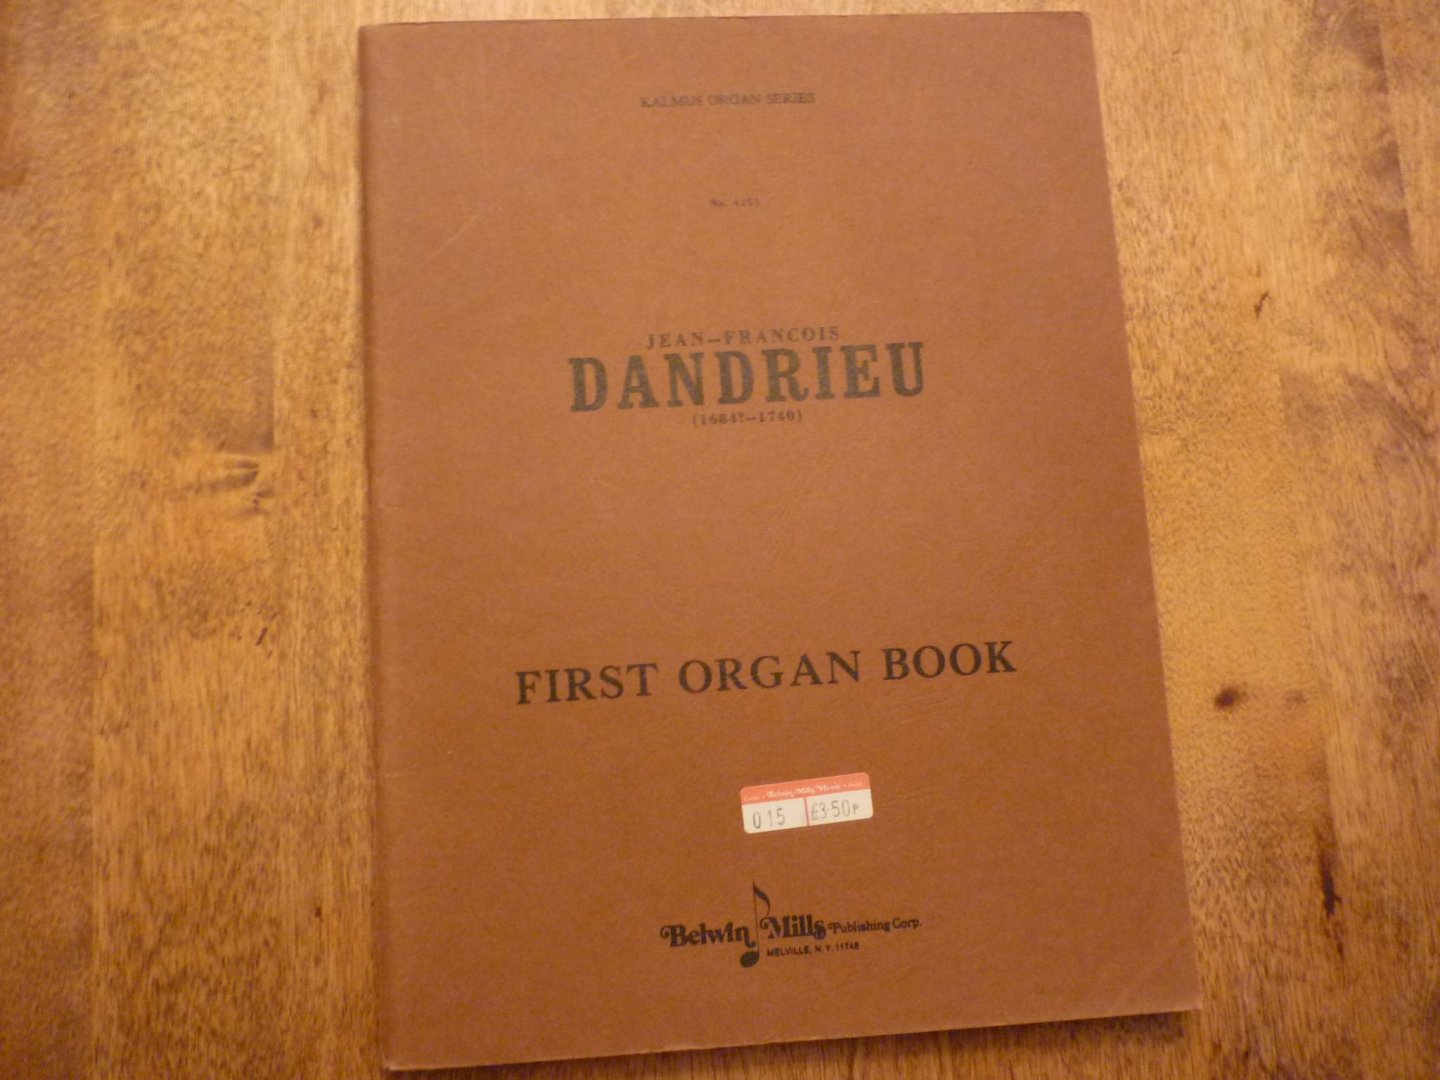 Dandrieu; Jean-Francois (1684?-1740) - First Organ Book